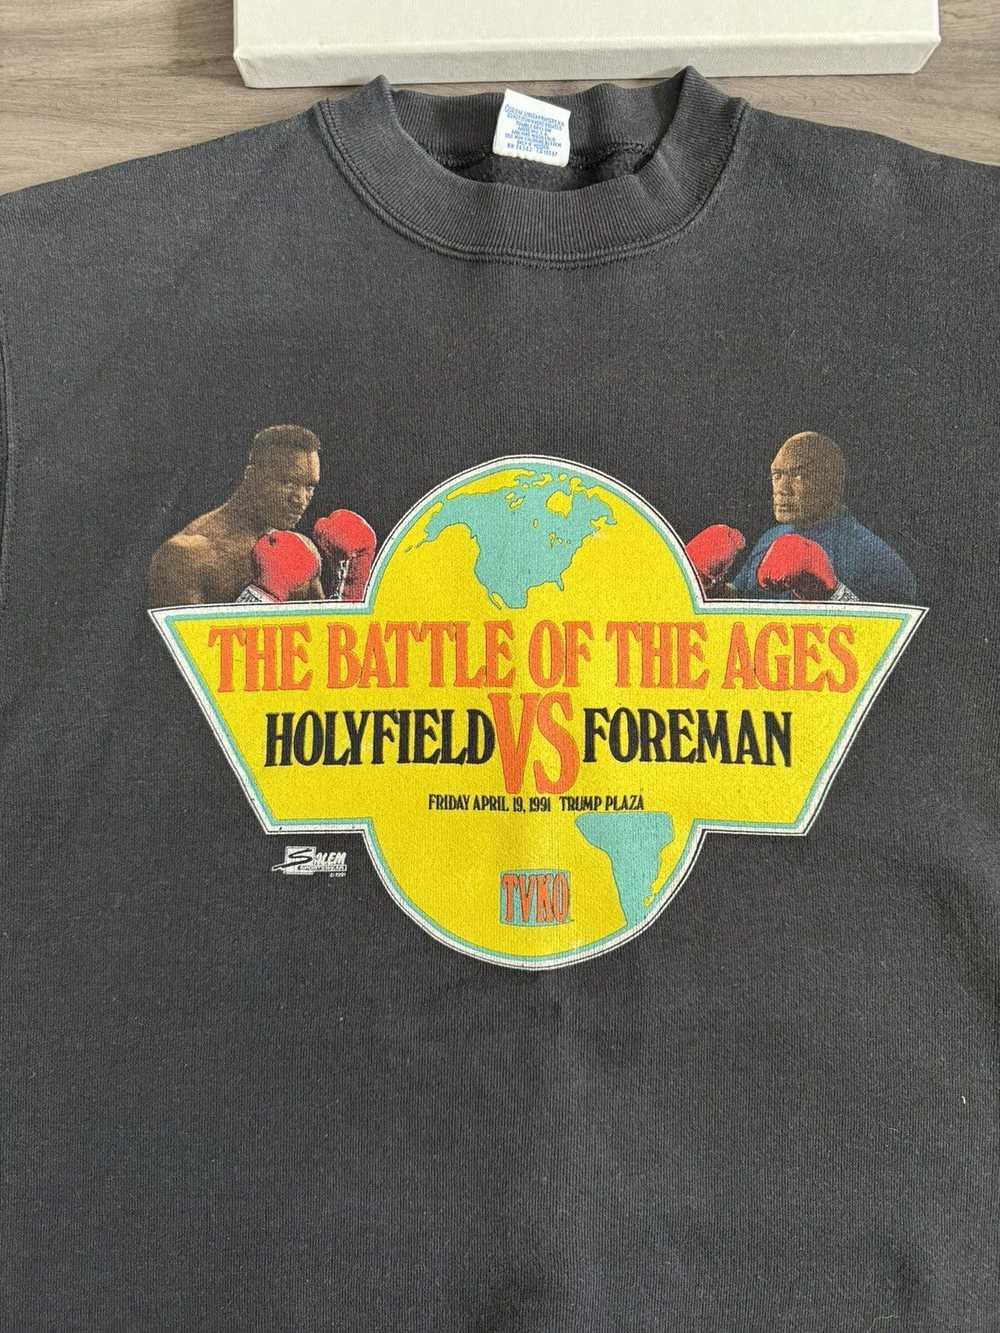 Vintage Boxing Crewneck Holyfield Foreman 1991 - image 2